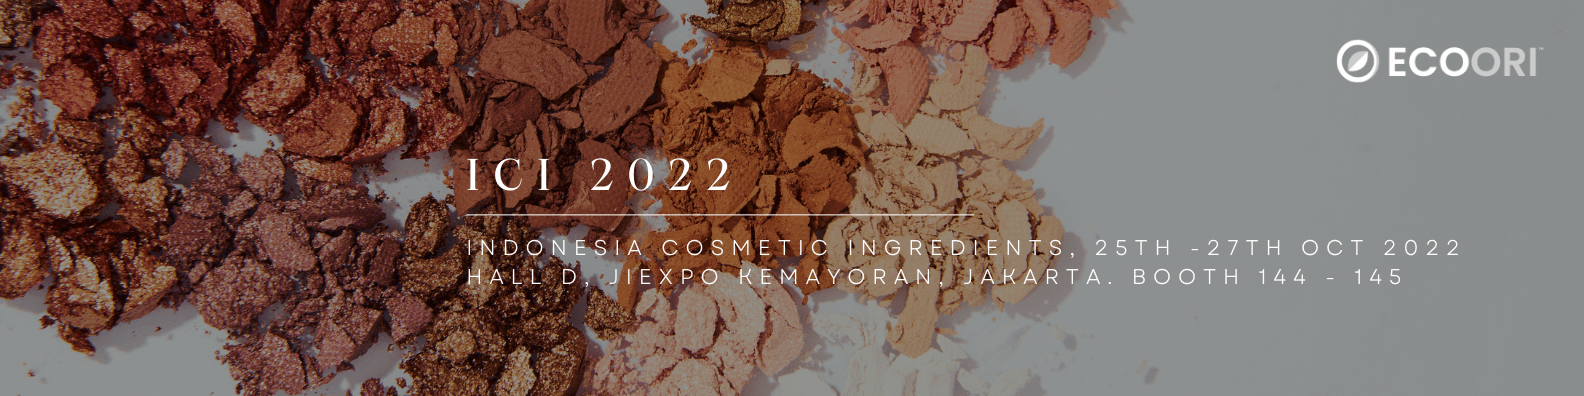 Indonesia-cosmetic-ingredients-ICI-2022